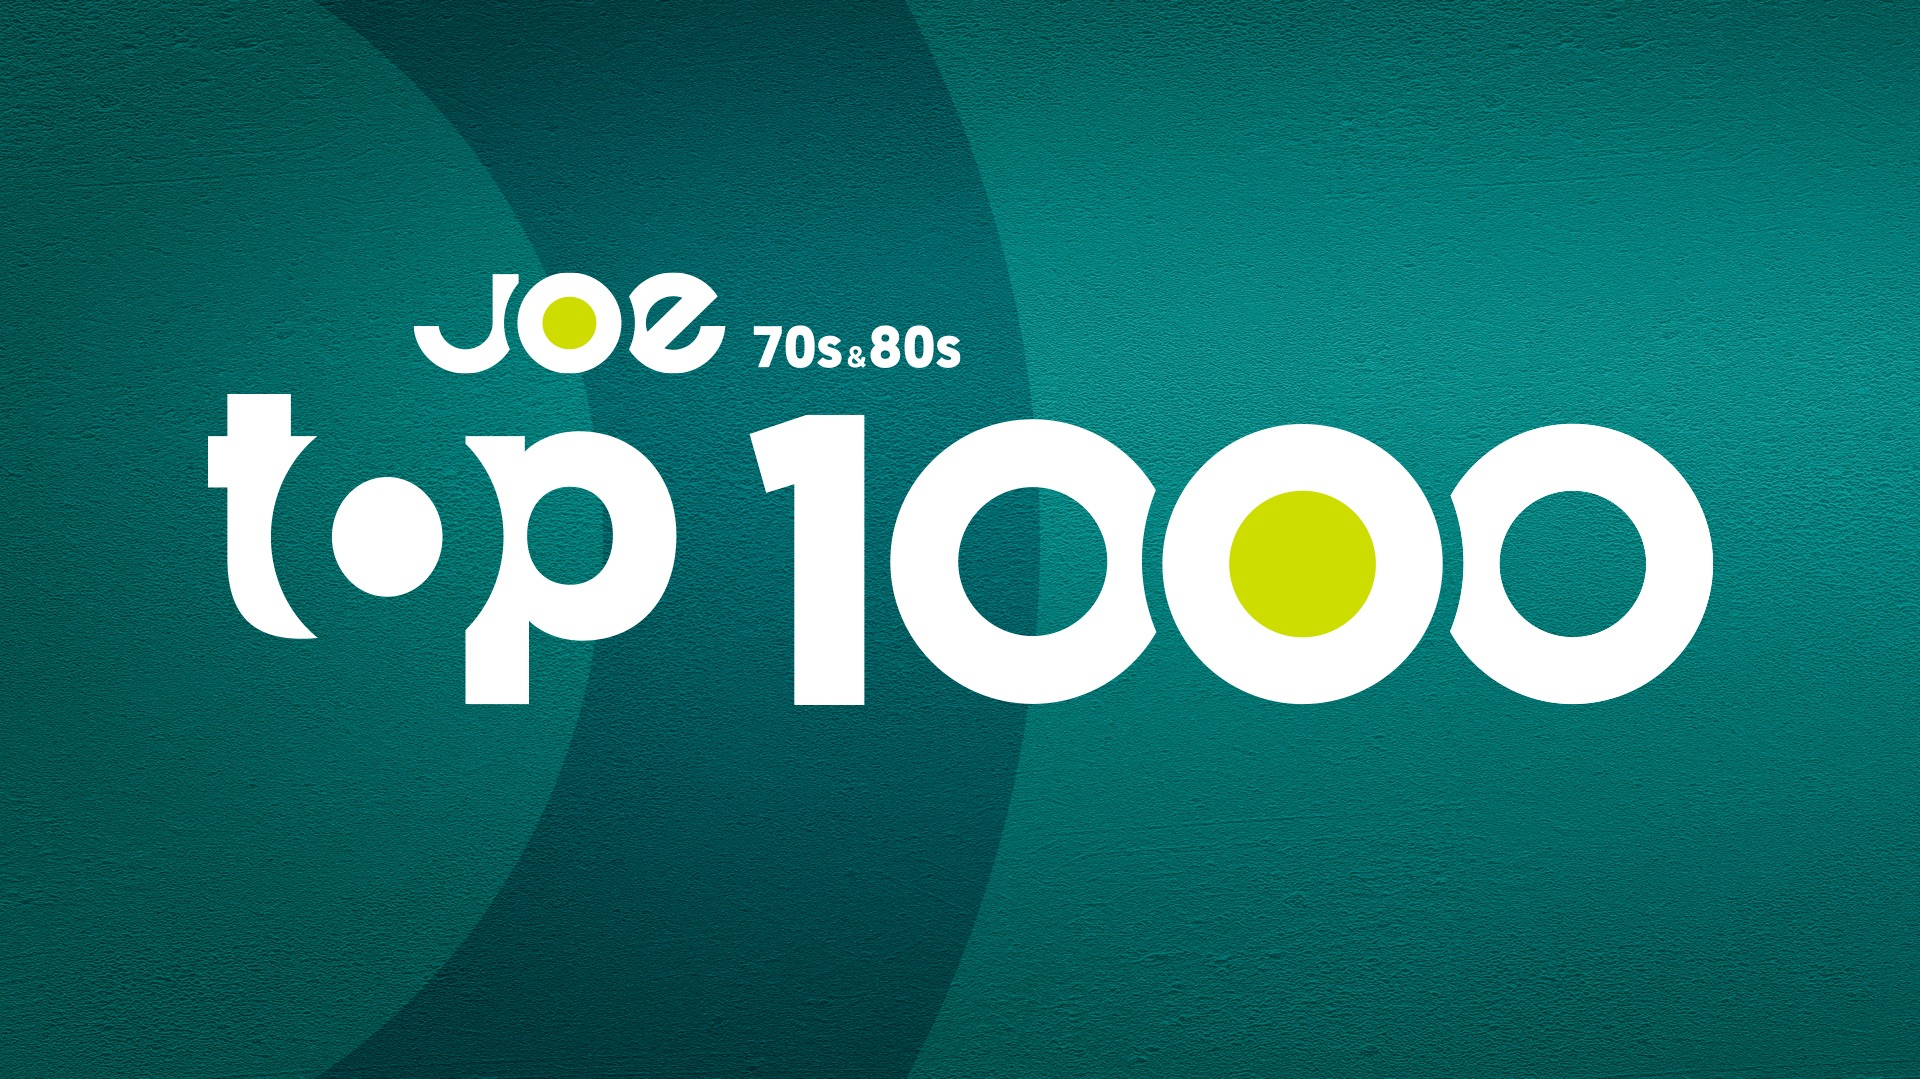 Joe top1000 v01